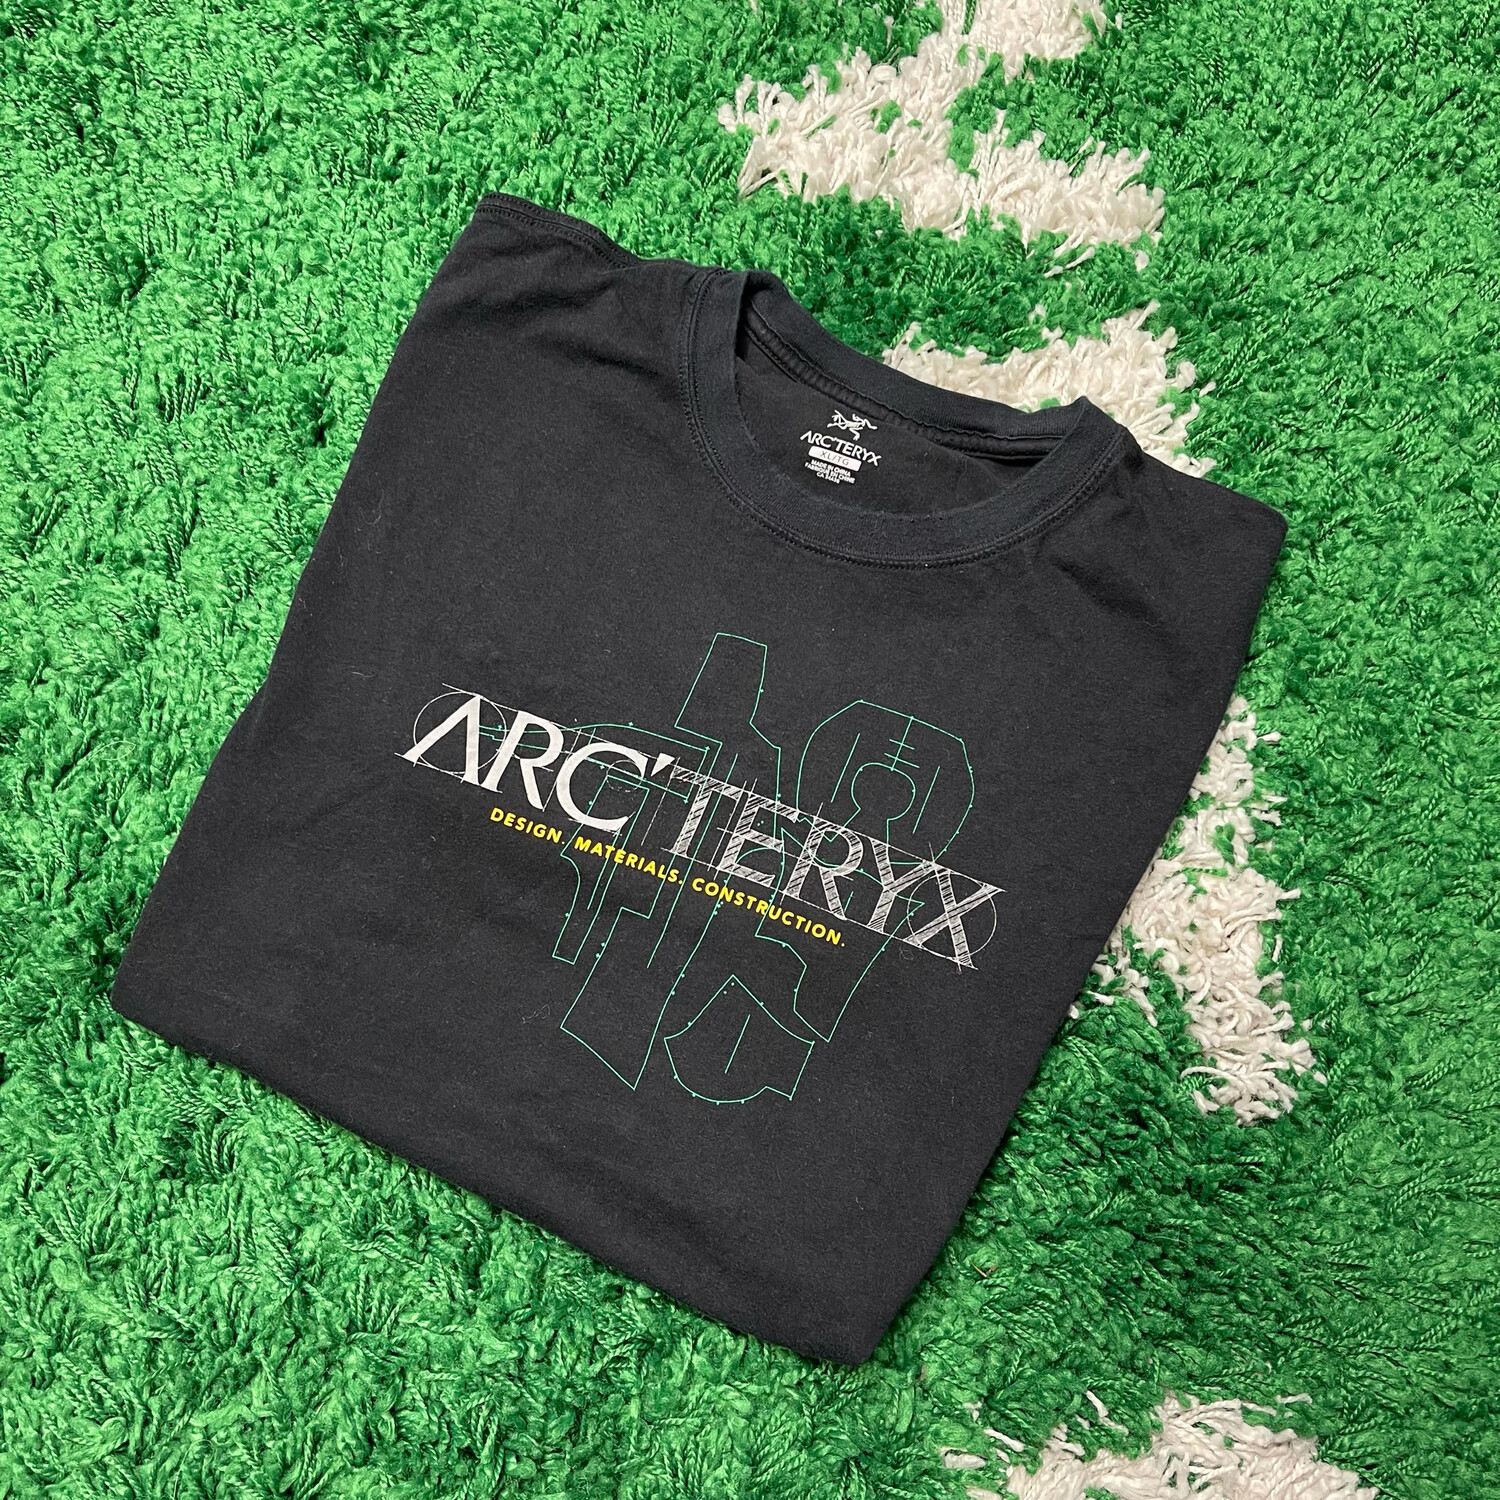 Arc'teryx Design Materials Construction Tee Size XL